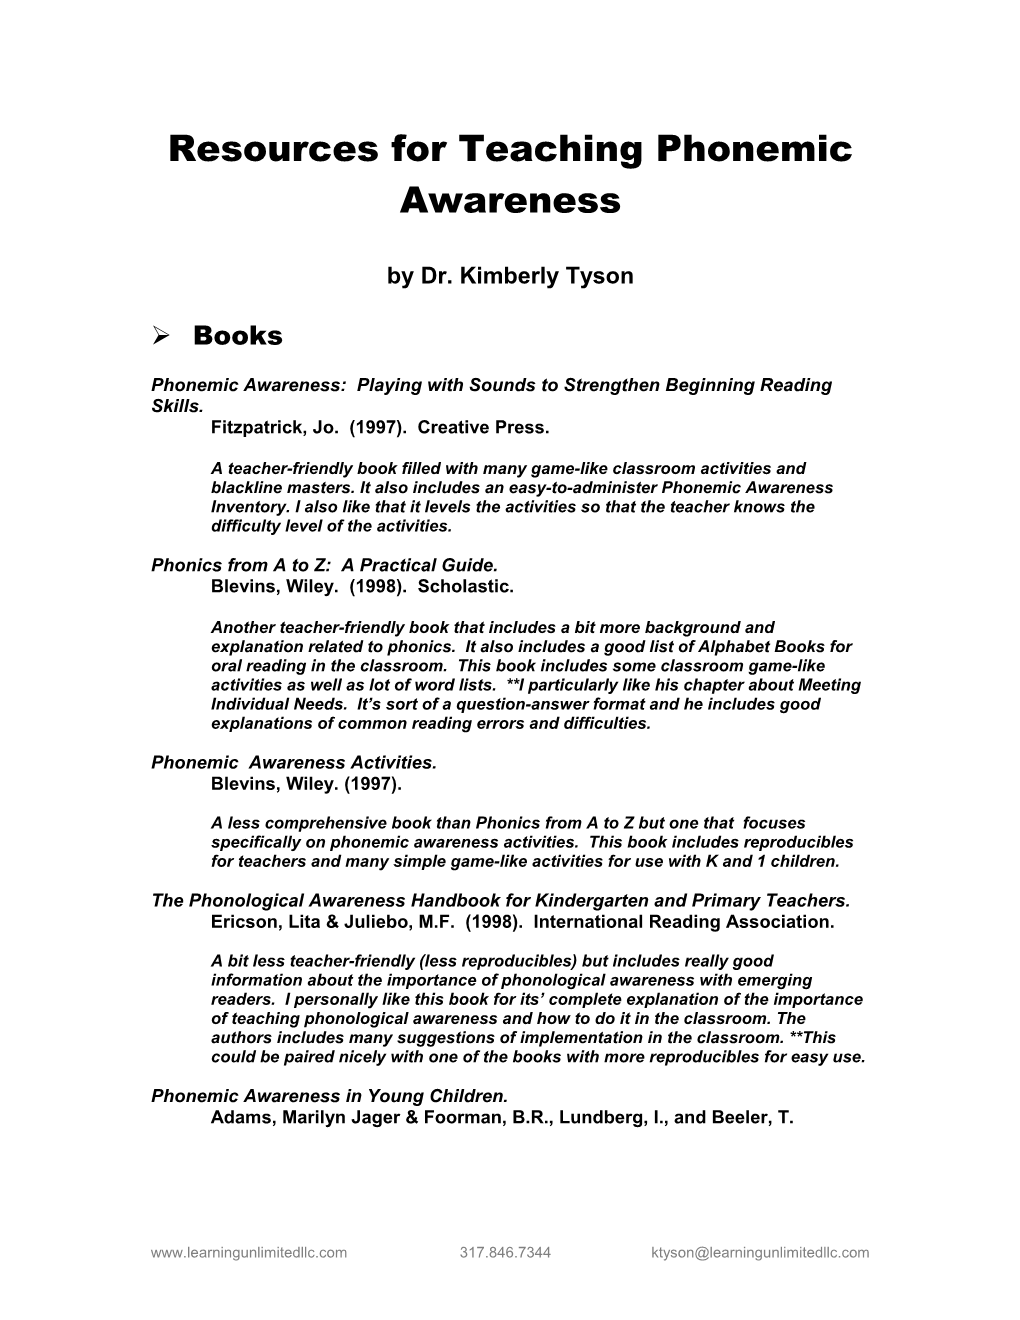 Resources for Teaching Phonemic Awareness